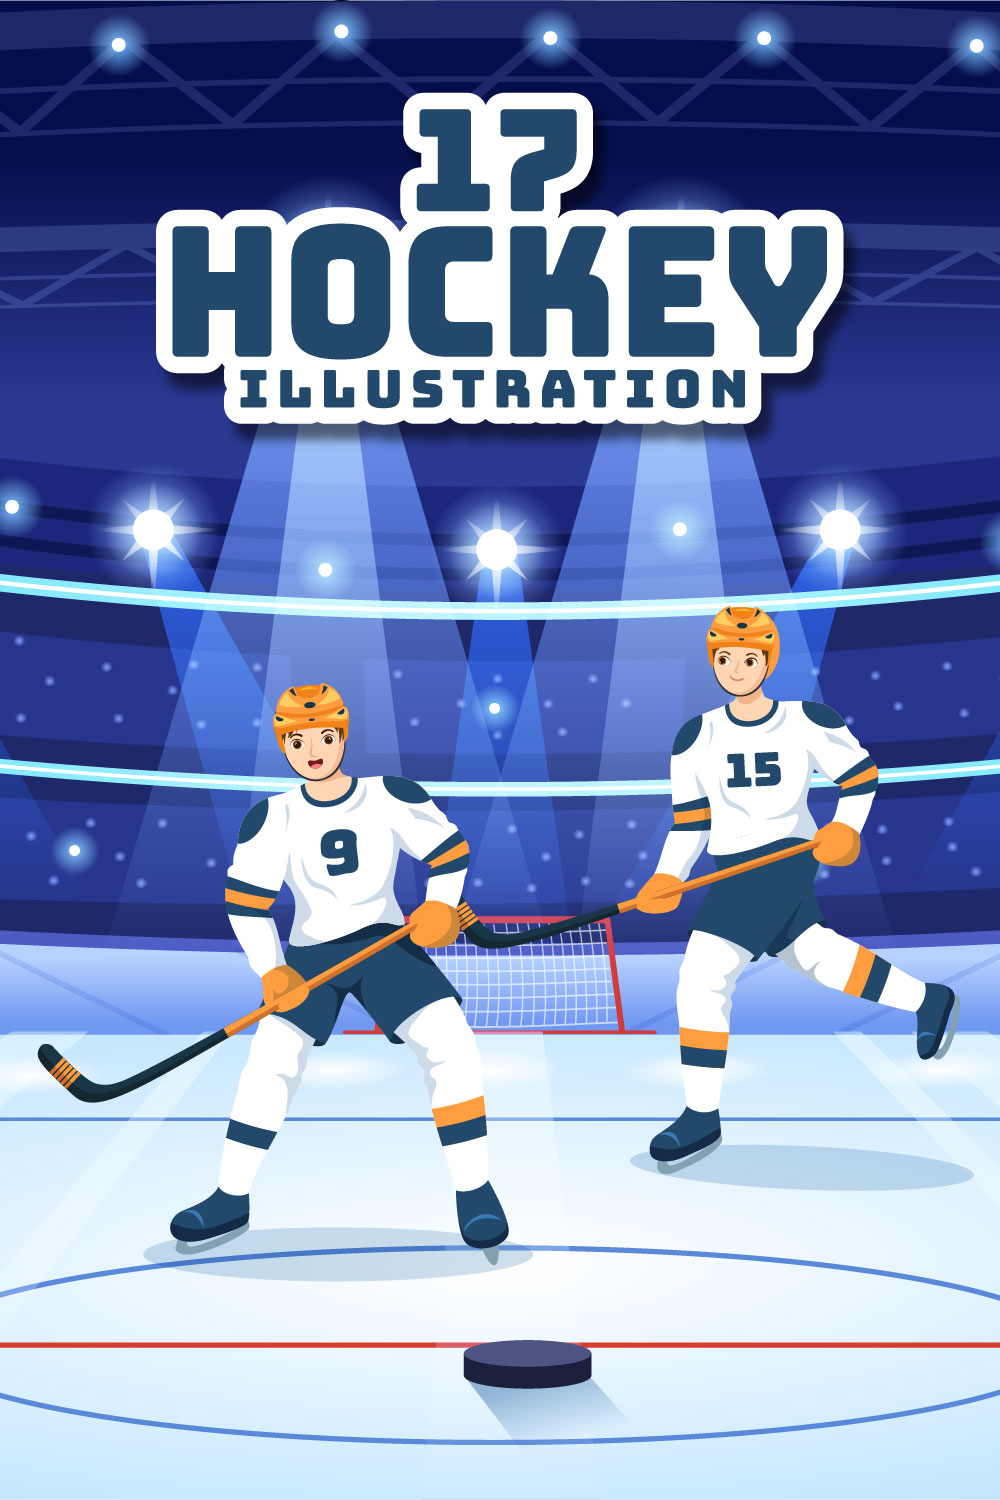 Ice Hockey Player Sport Illustration pinterest image.